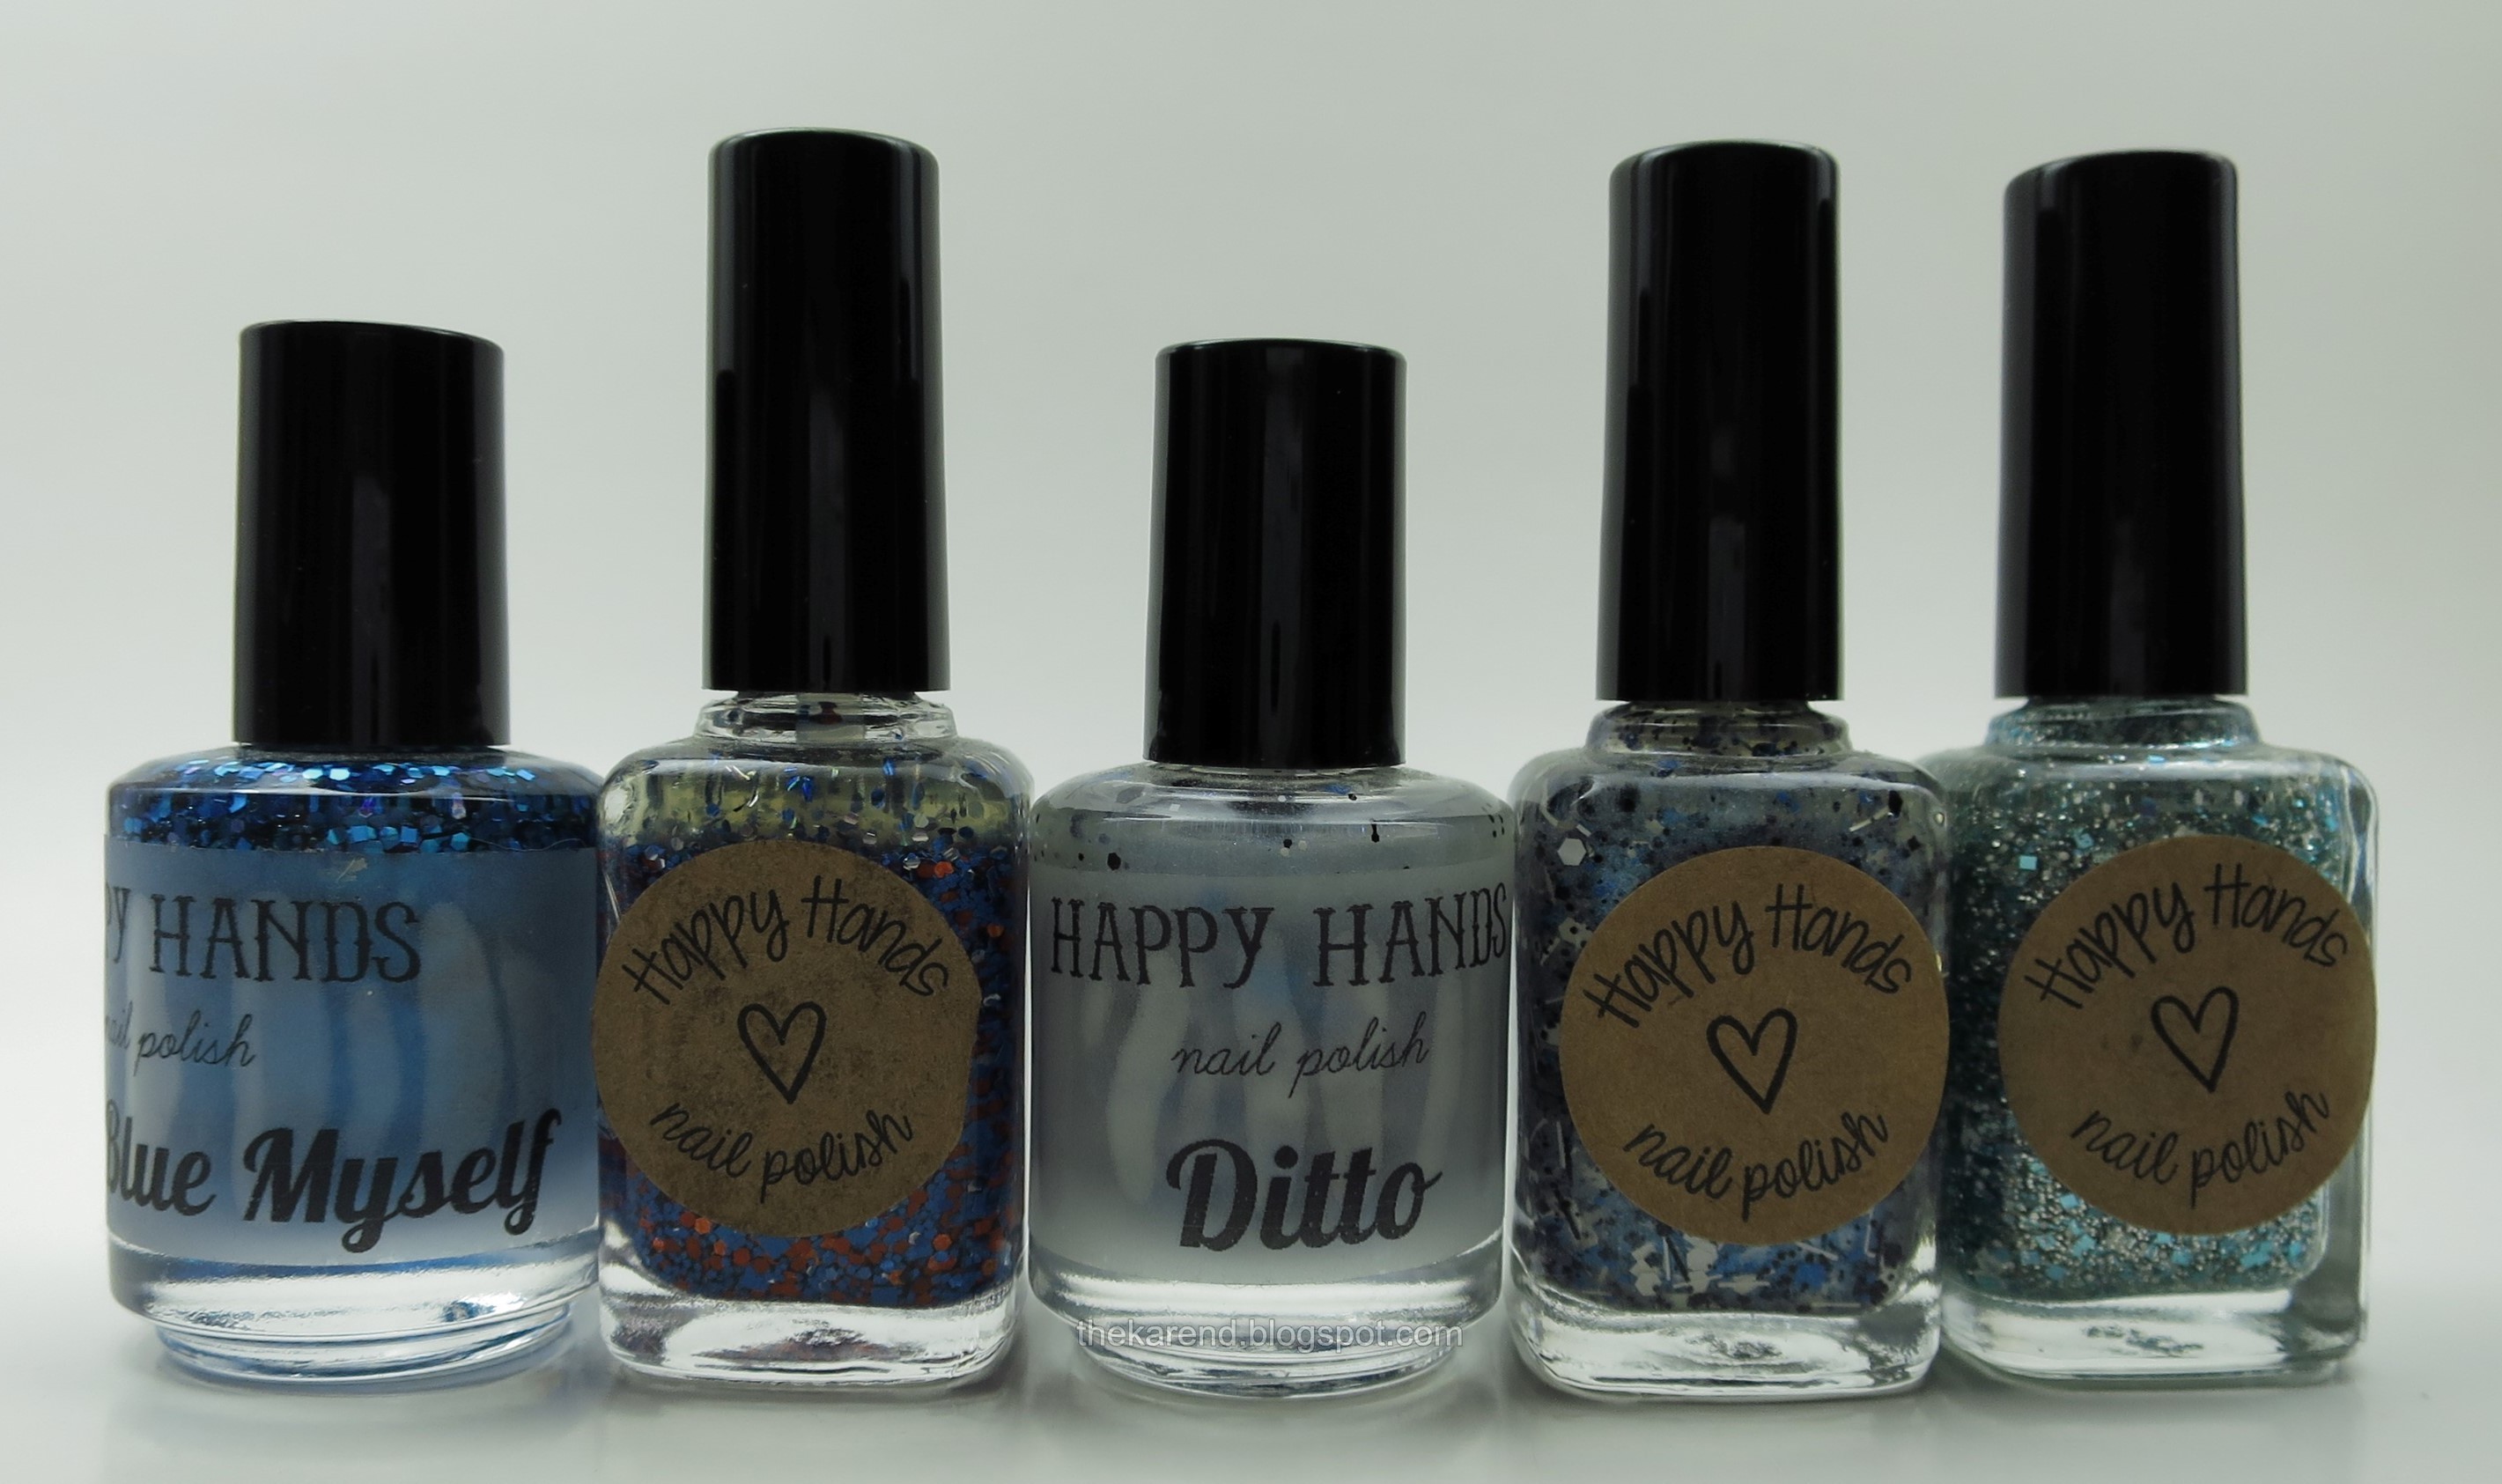 glitter nail polish from Happy Hands